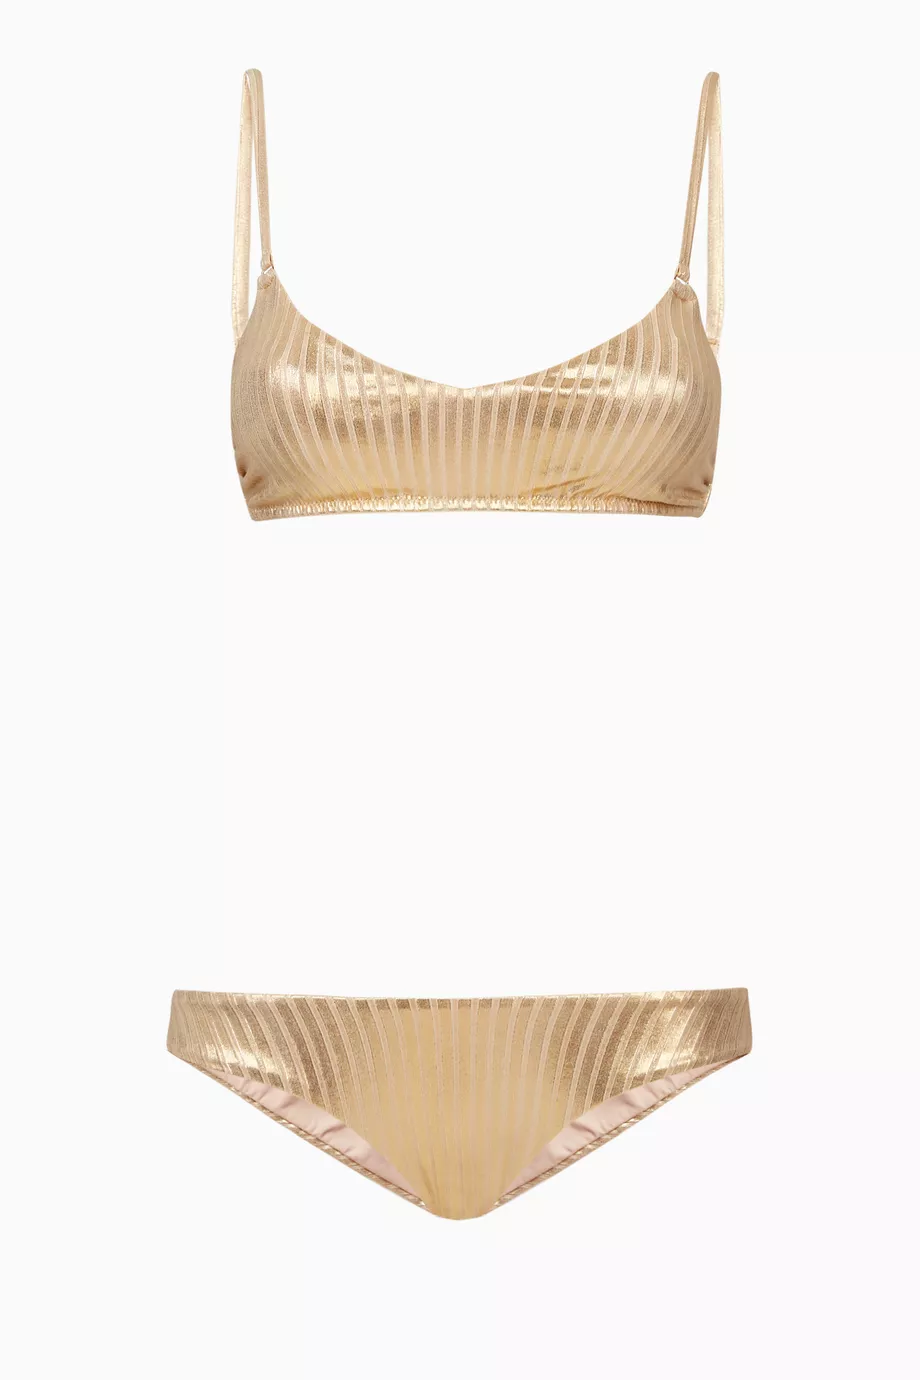 Melissa Odabash Vienna Ribbed Gold Bralette Bikini Top